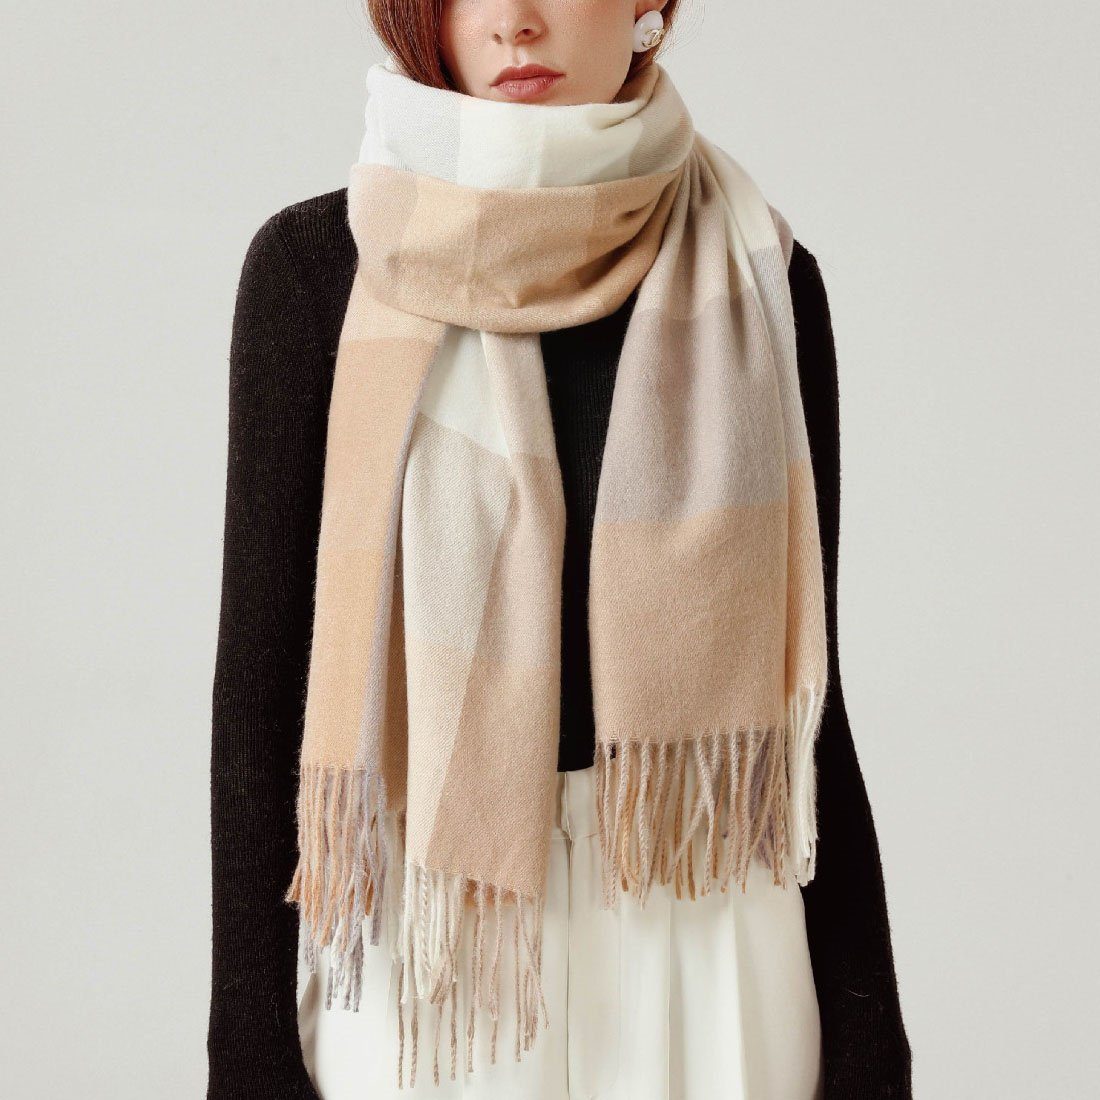 DÖRÖY Modeschal Damen Schal Winter Schal, khaki Vintage quadratischen Warm gestreiften